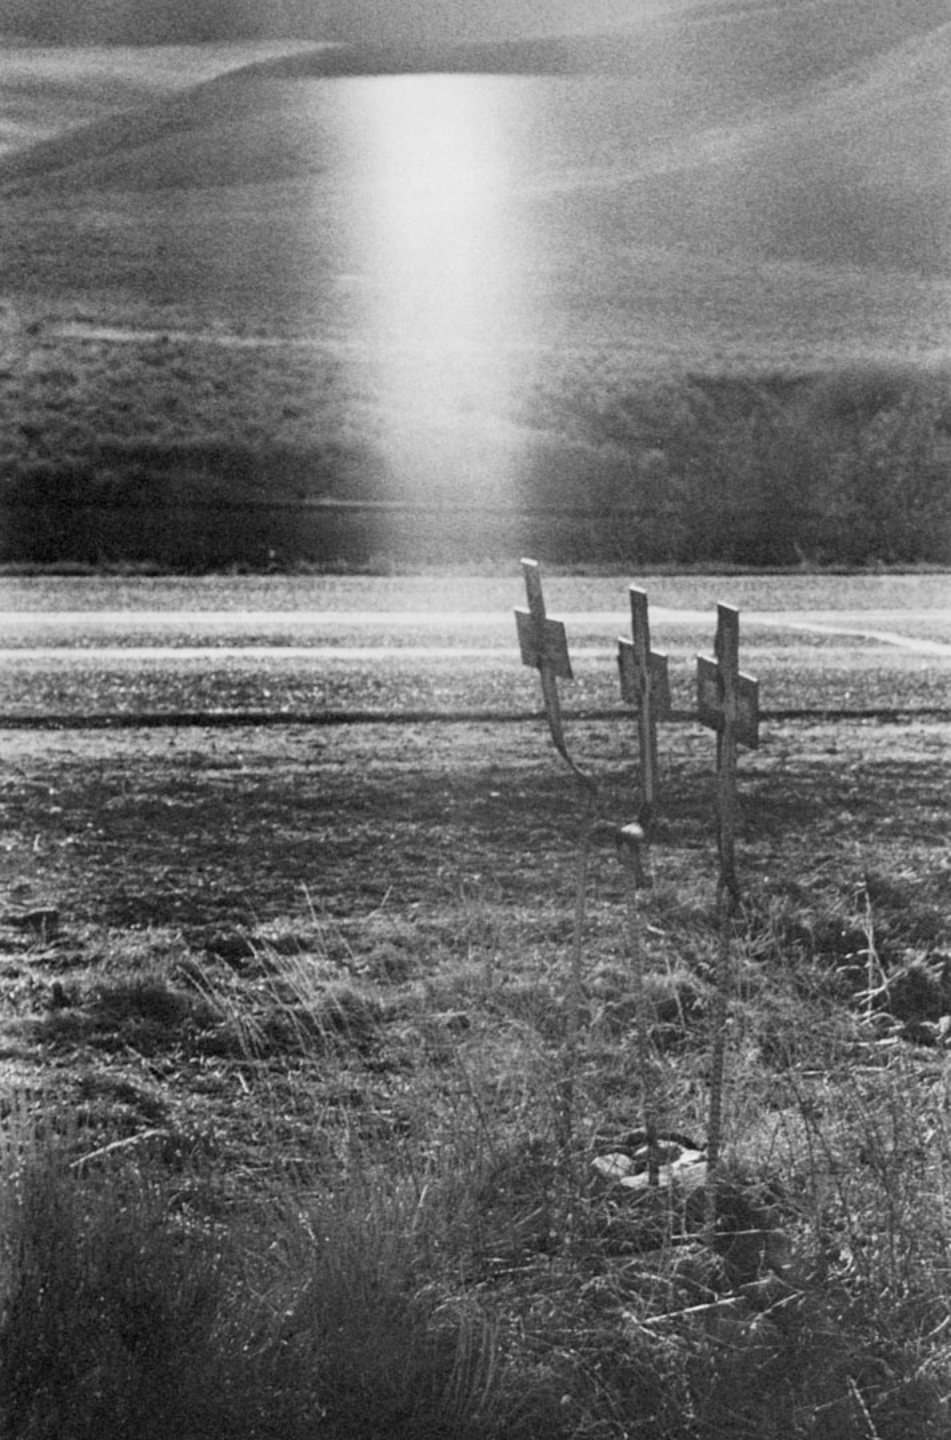 Crosses on scene of highway accident — U.S. 91, Idaho, 1956